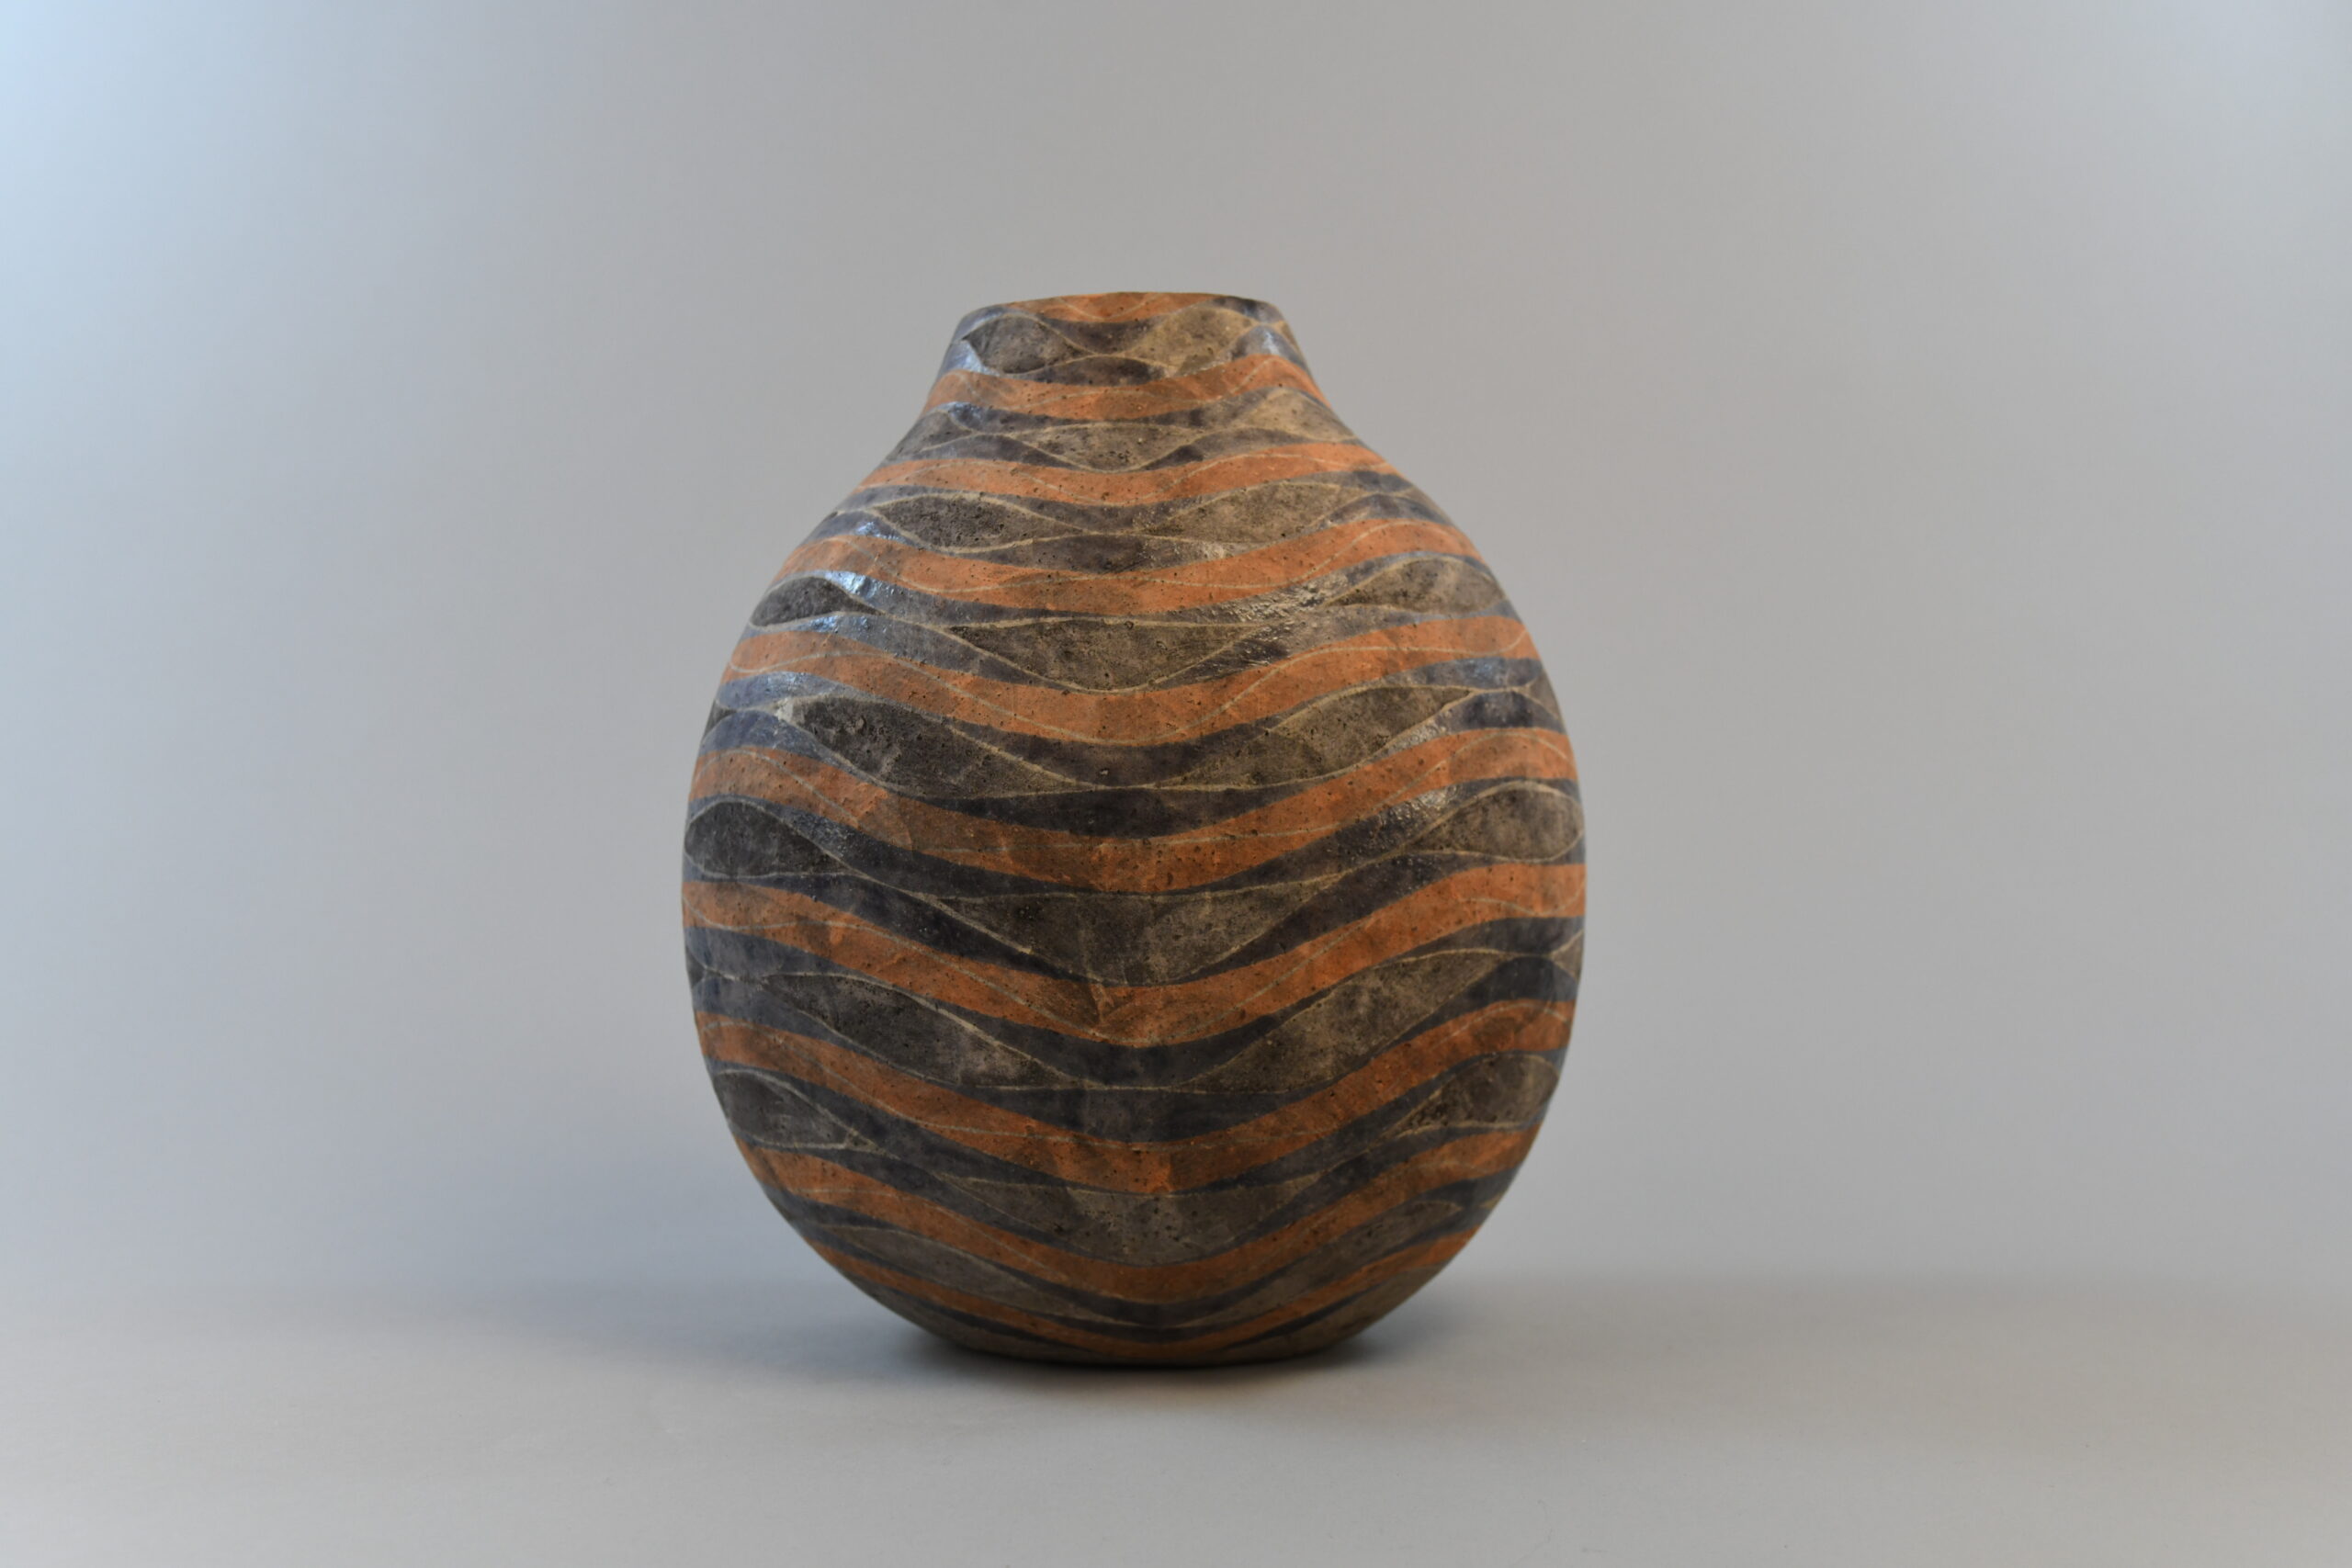 Kenzo Okada, Vase with Stream Pattern, 1987, stoneware with matte slip glaze in peach and purple. Promised gift of Carol and Jeffrey Horvitz.